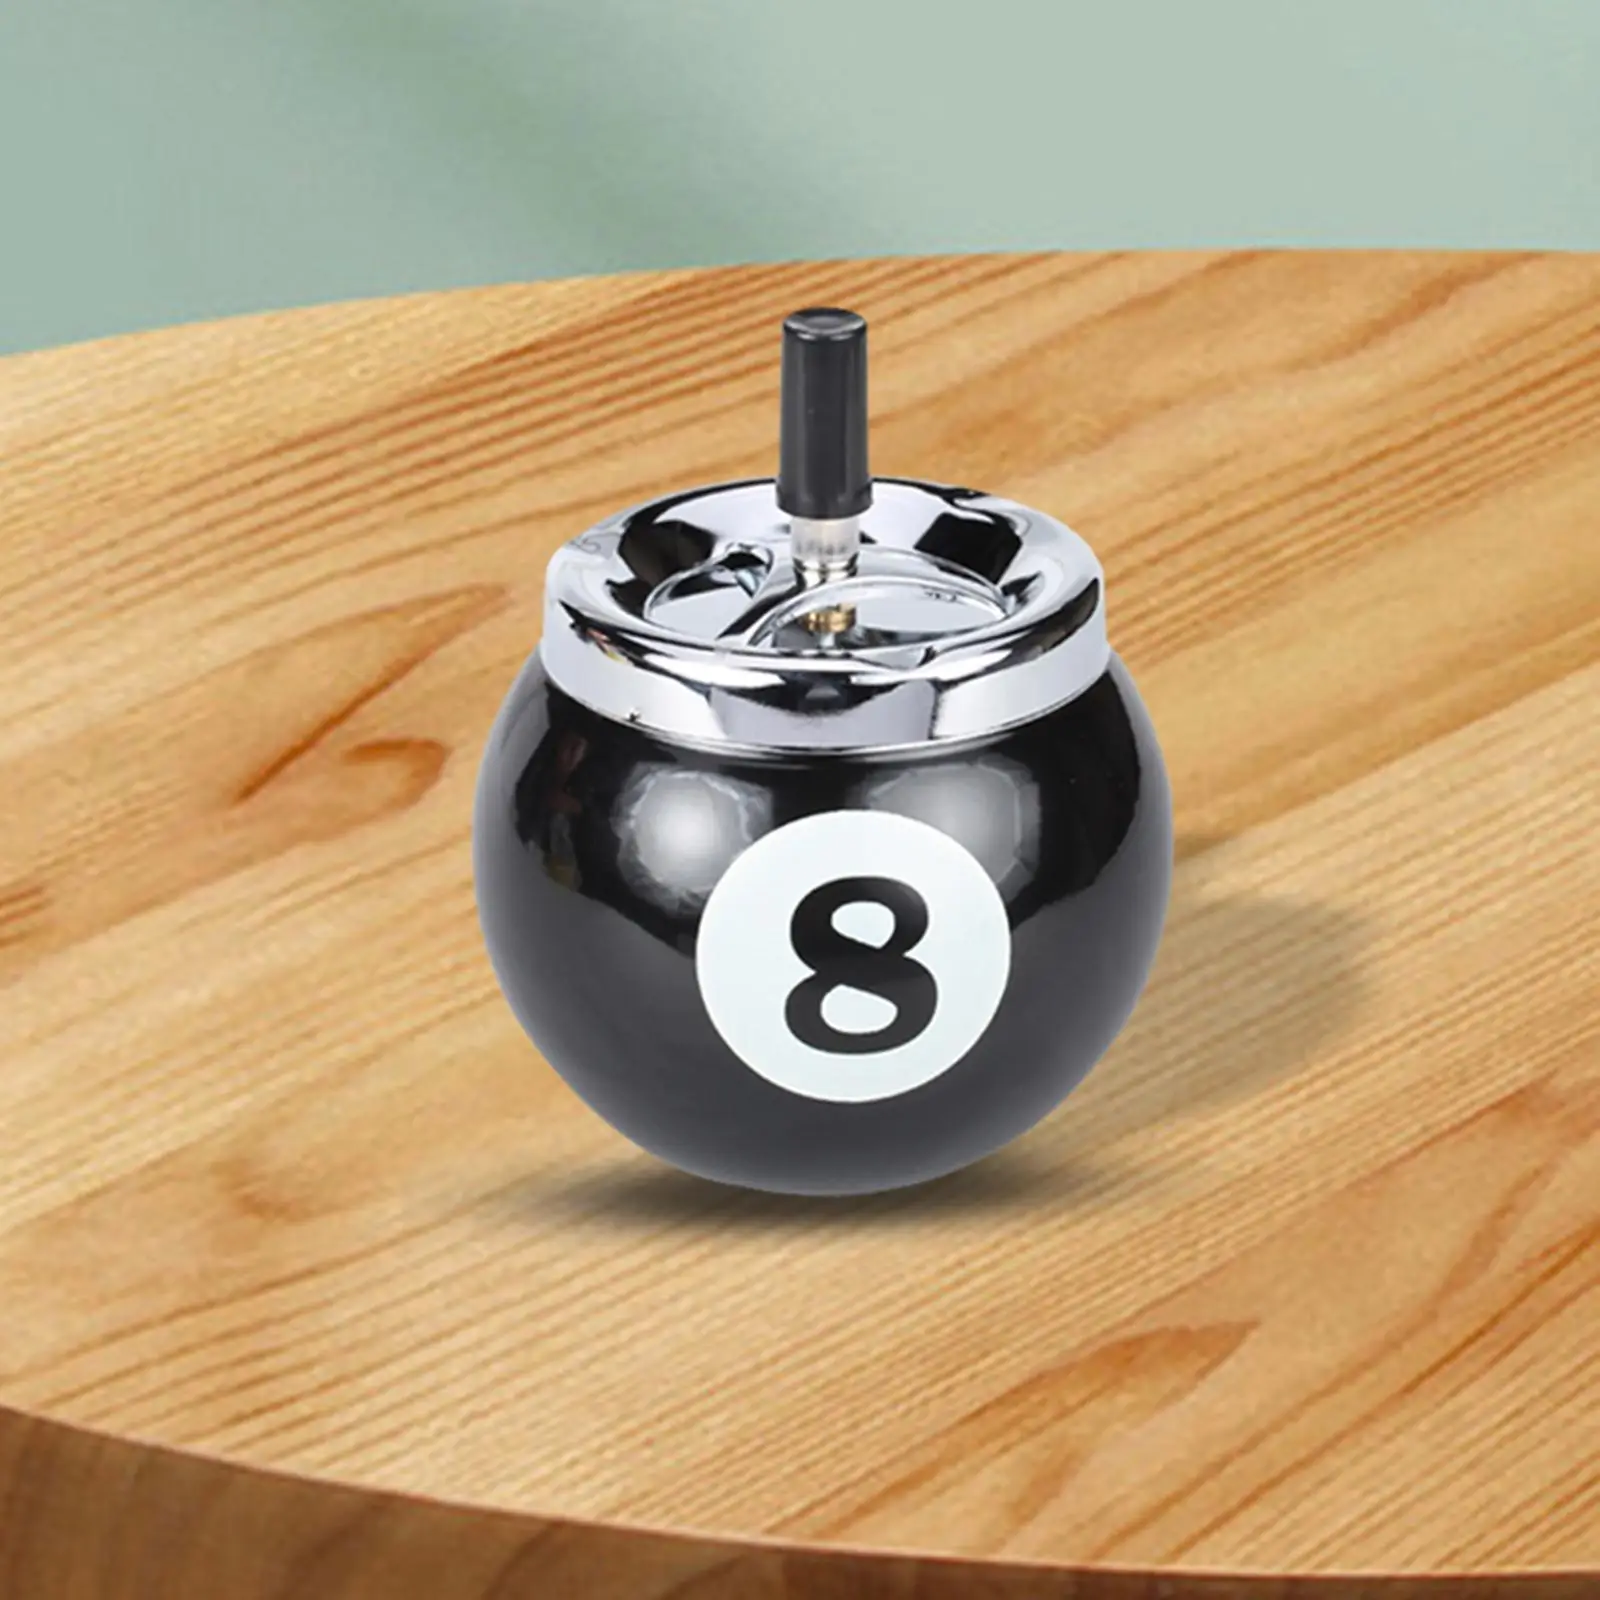 Push Button Shaped Billiard Ball.89.6 Cm